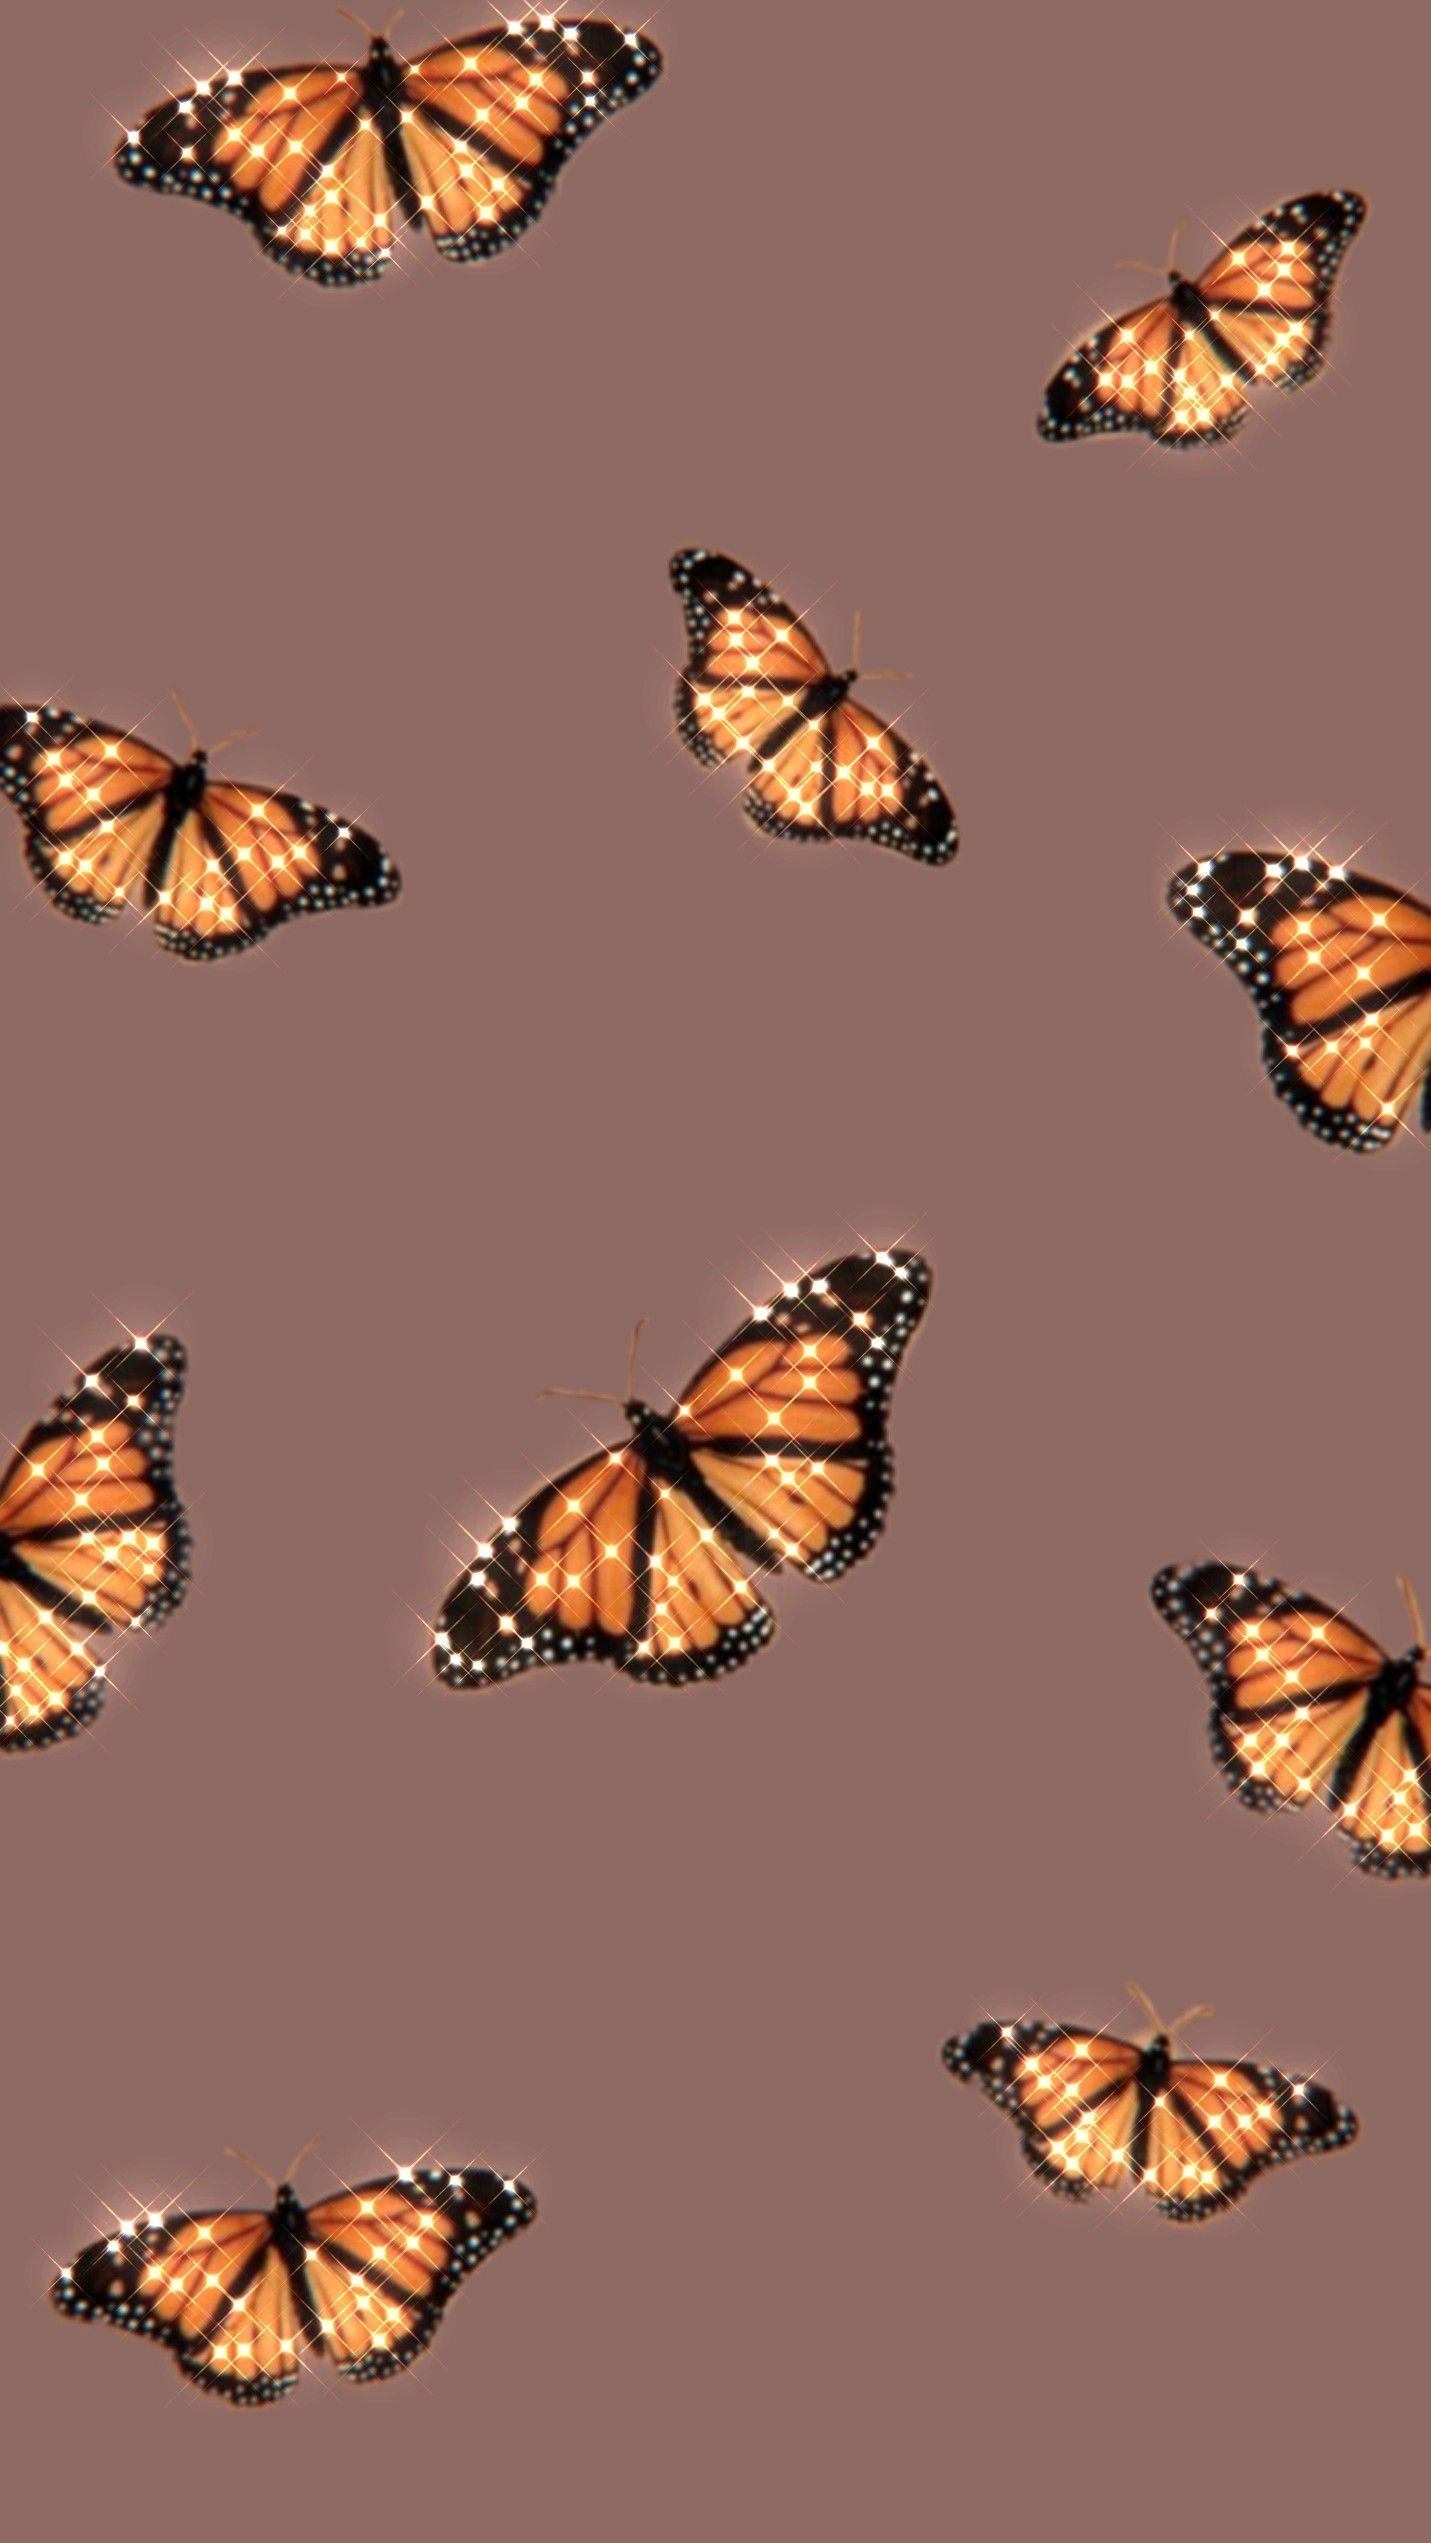 Butterfly. Butterfly wallpaper, Brown aesthetic, Brown butterflies